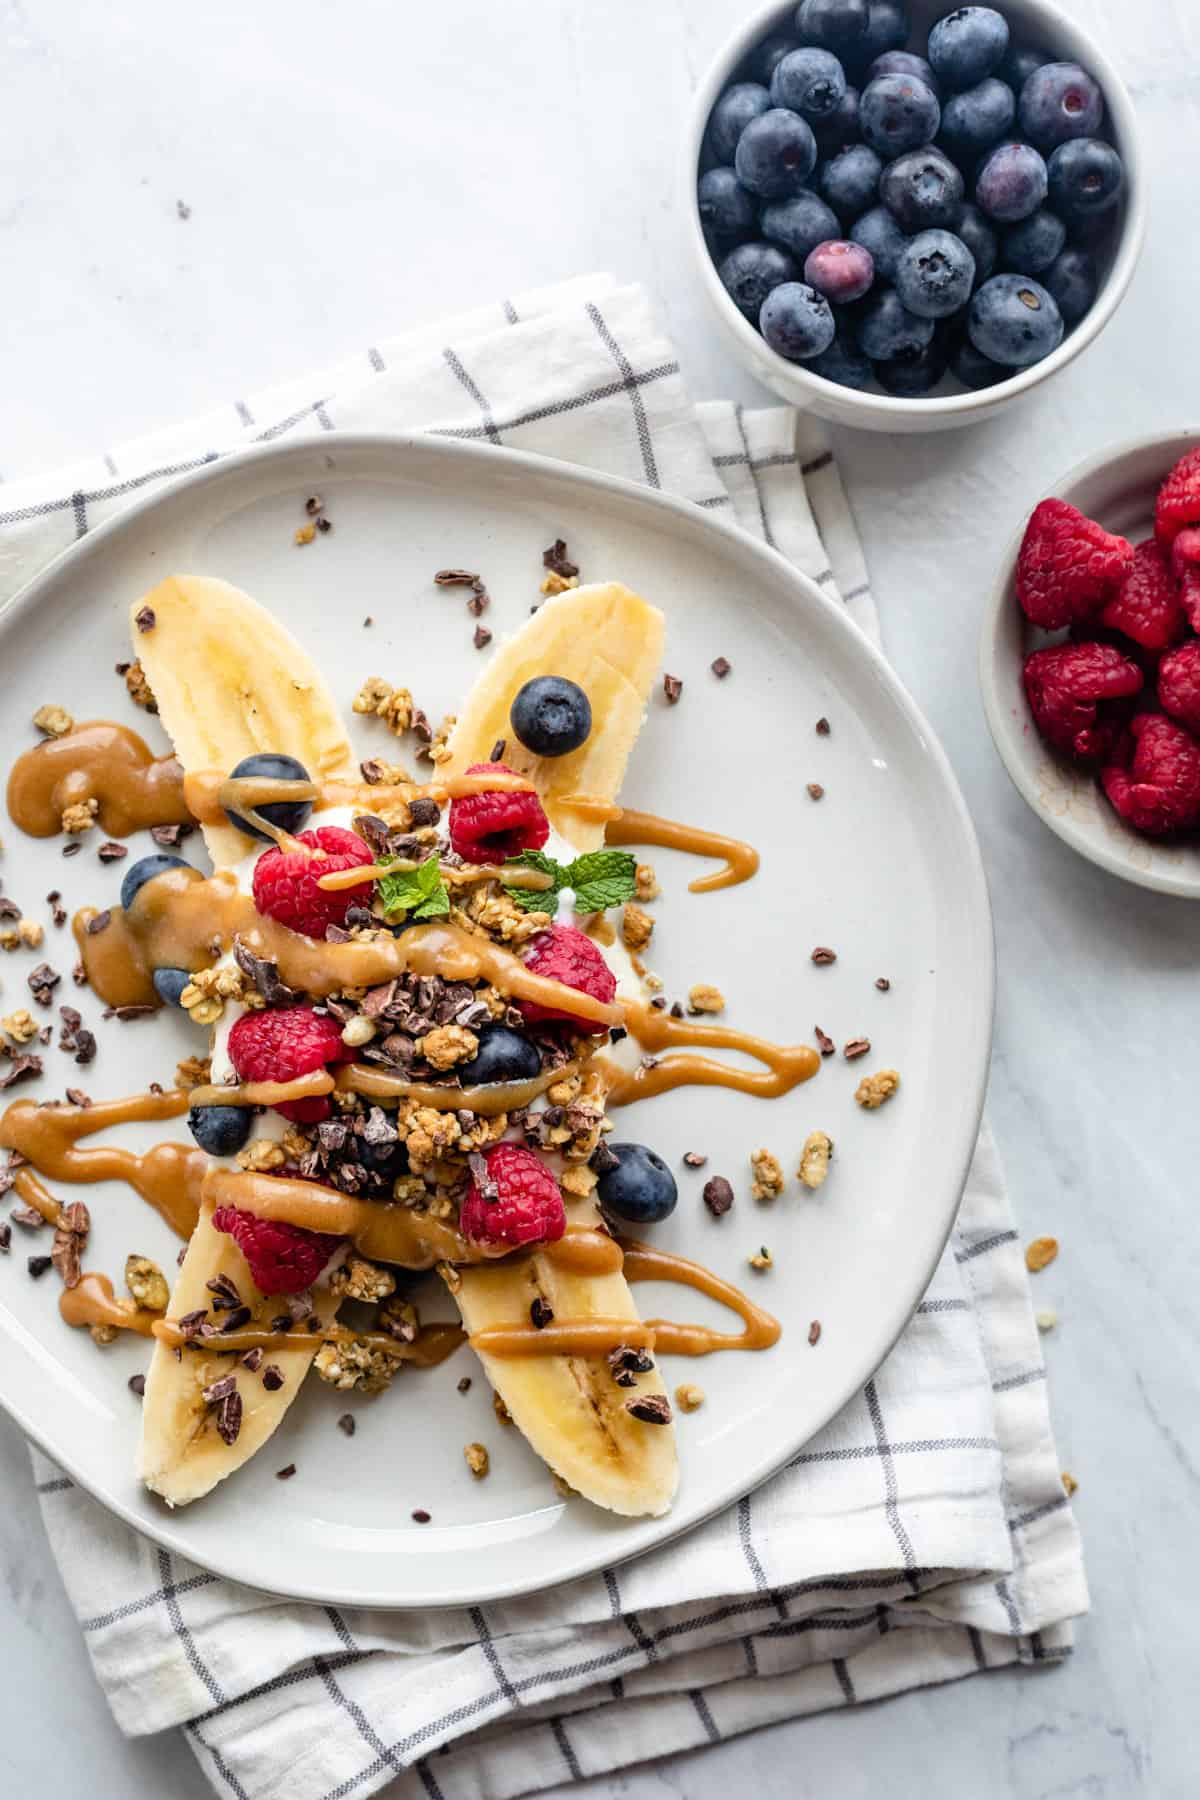 Healthy banana split topped with yogurt, fruit and granola